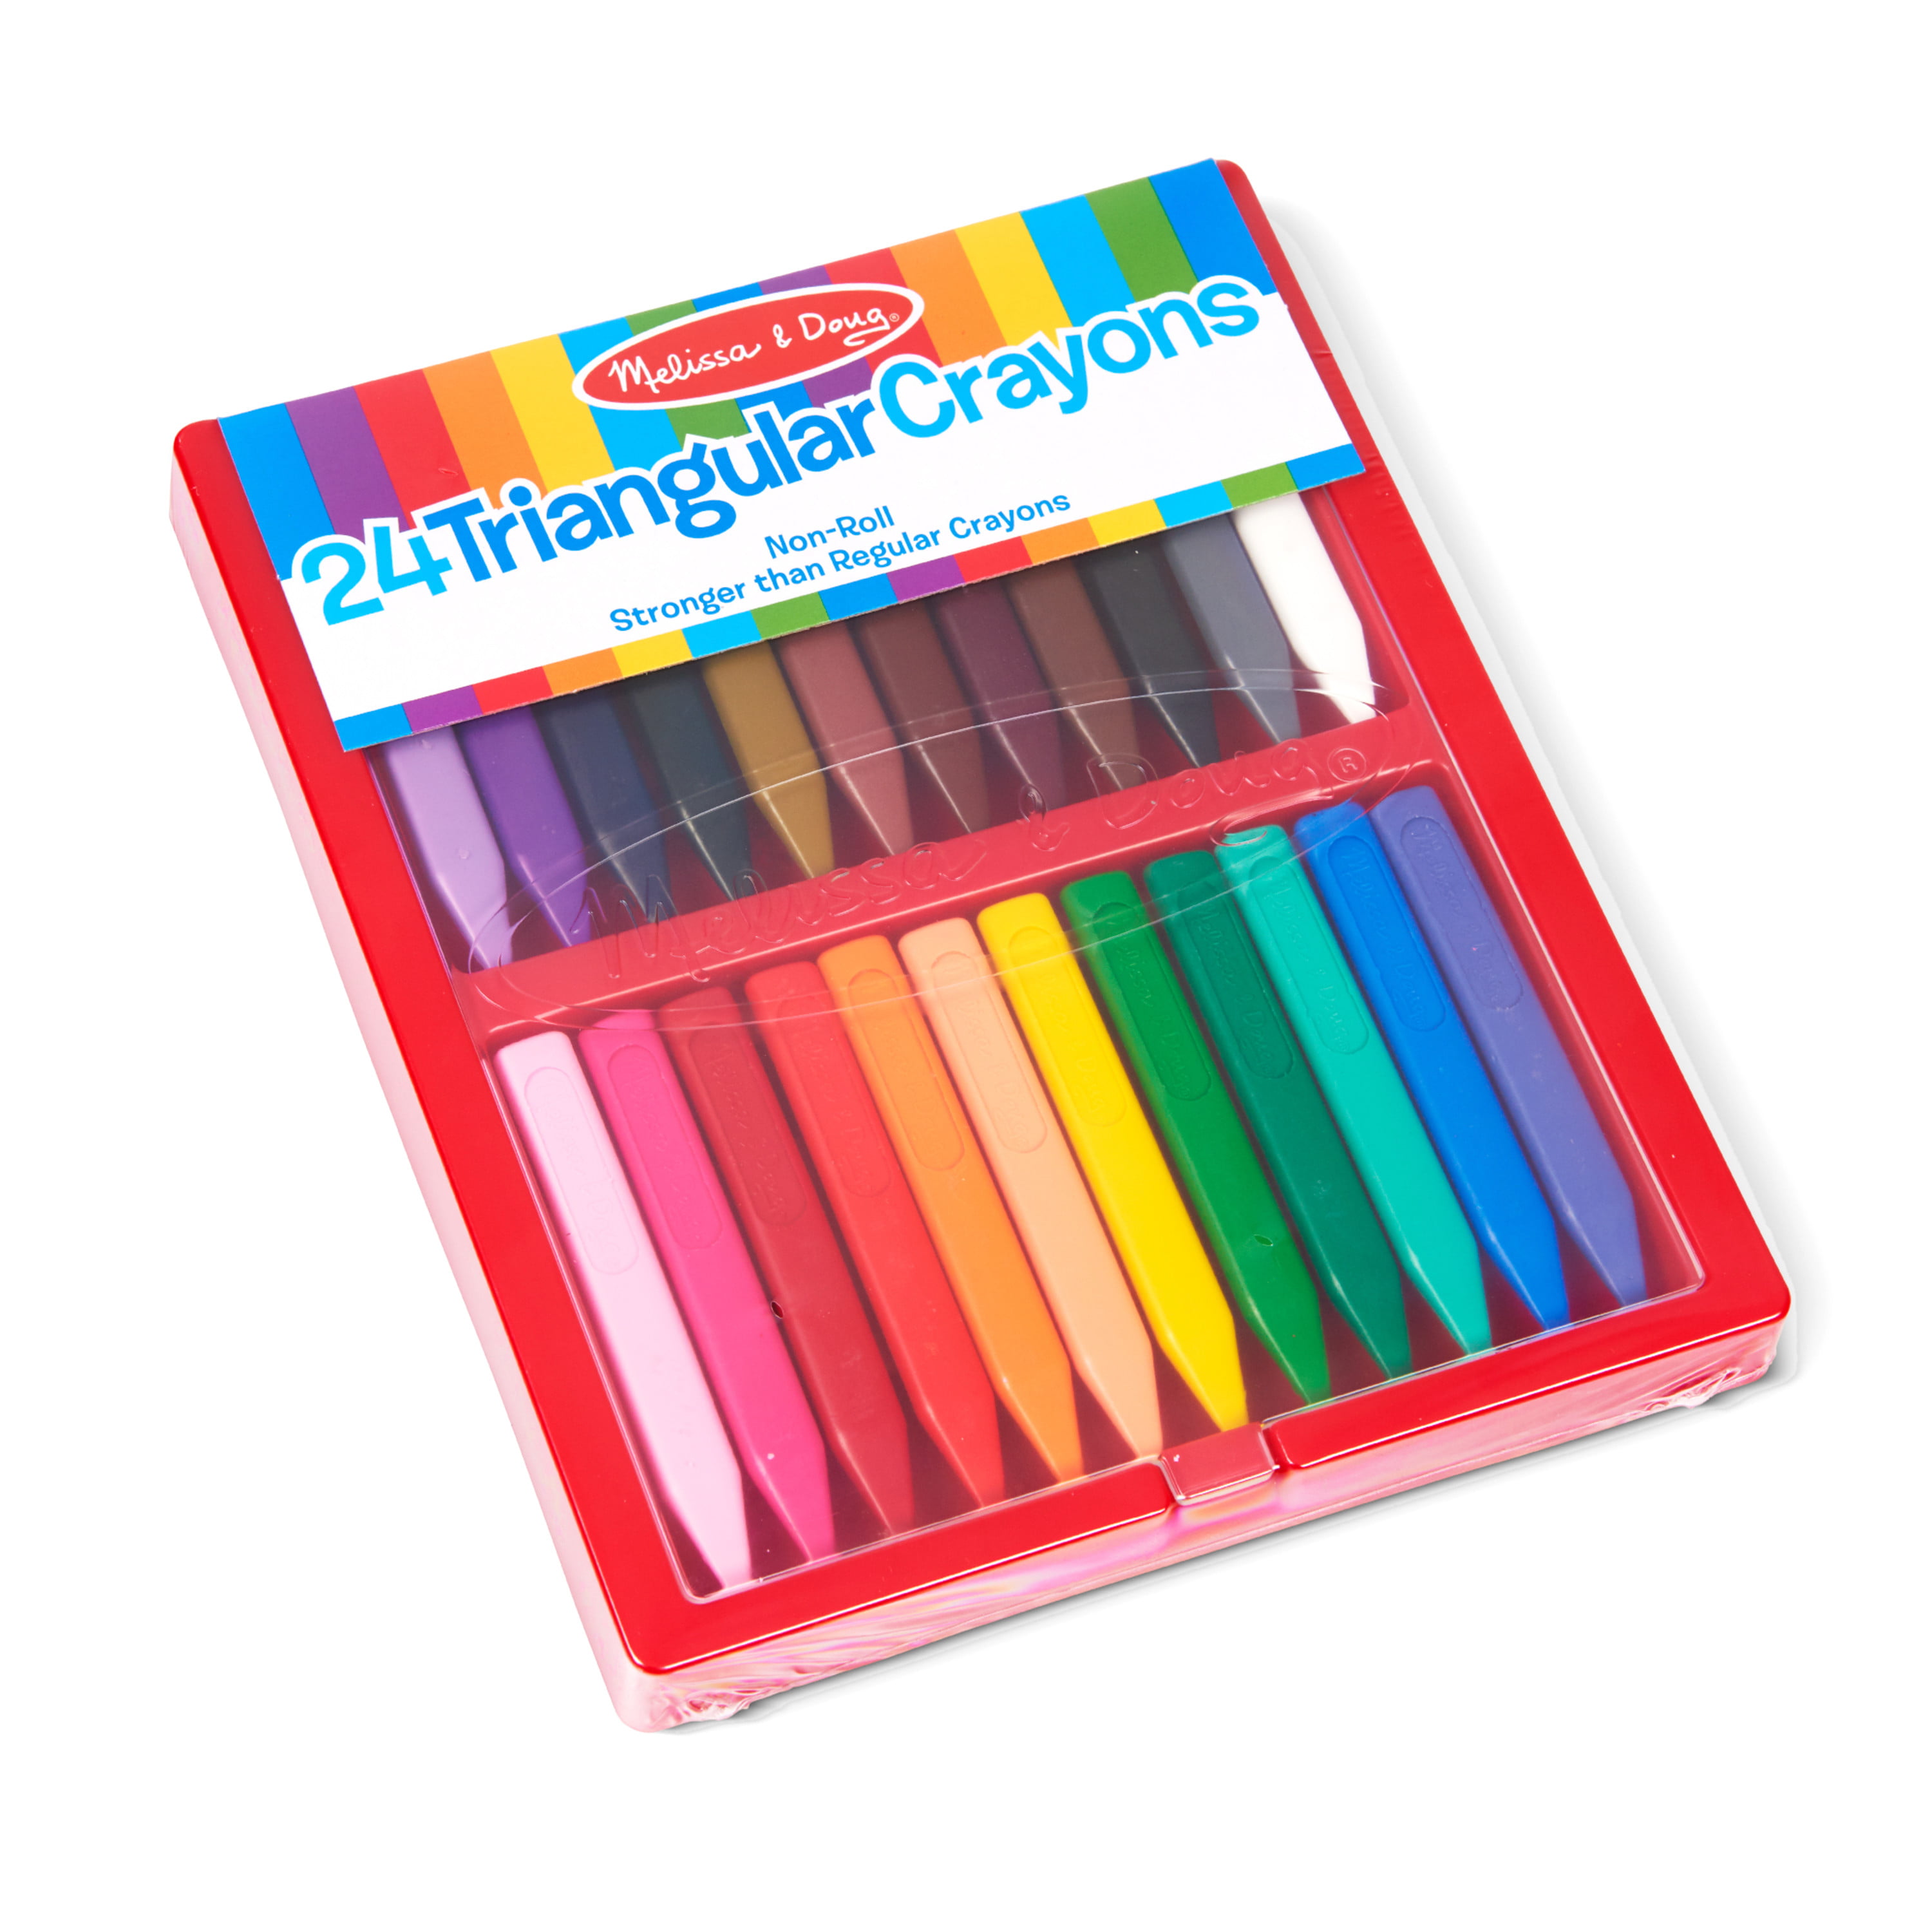 Melissa & Doug Triangular Crayons - 24-Pack in Flip-Top Case, Non